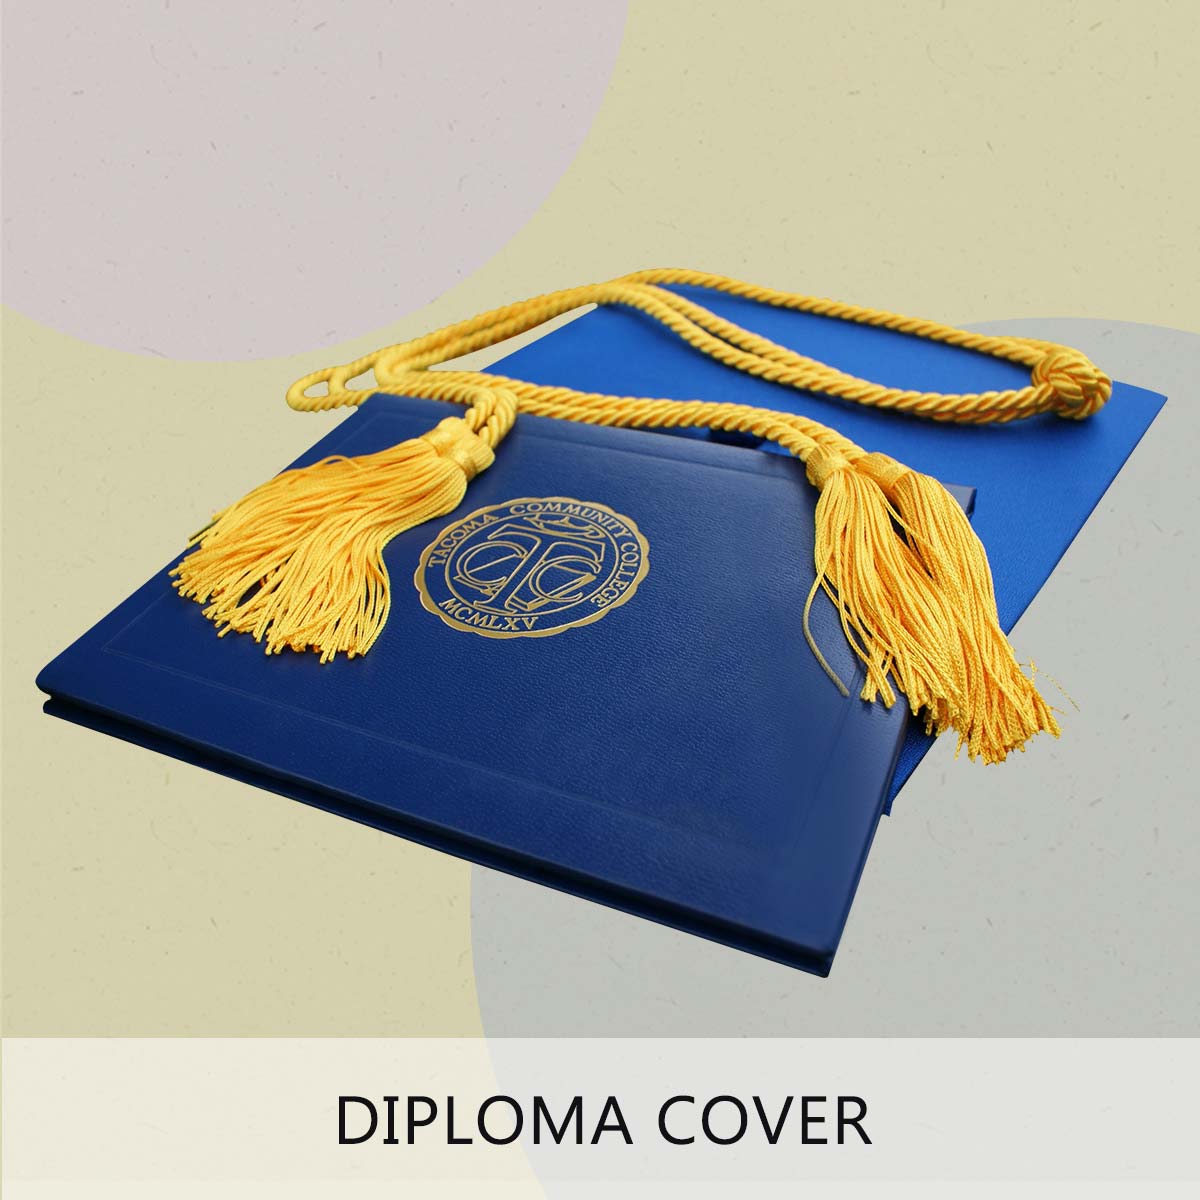 phd graduation gown in ethiopia